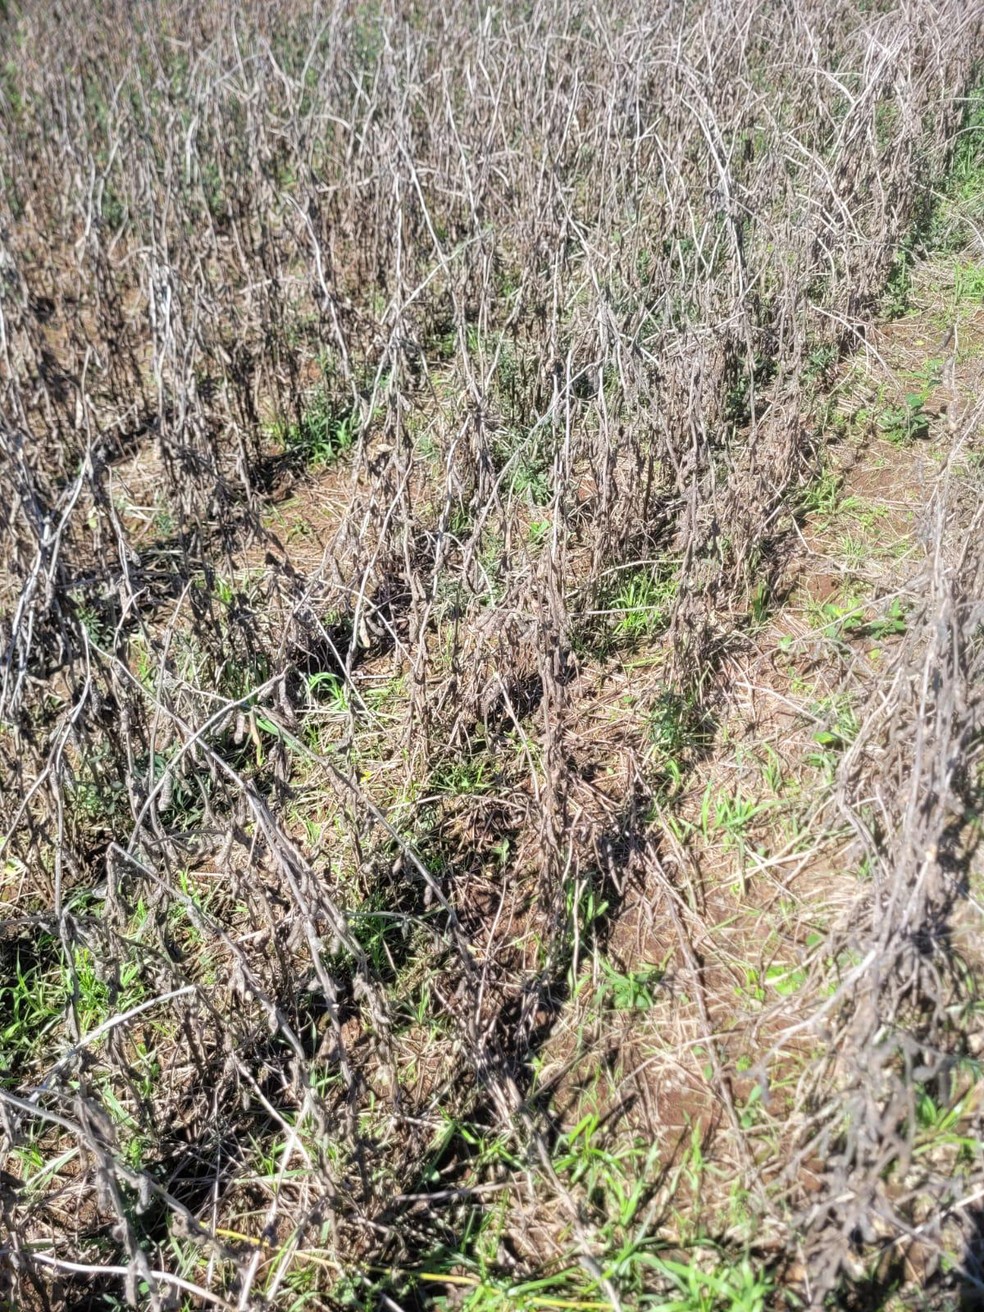 Soybean crop affected by rains in Soledade, Rio Grande do Sul — Foto: Daniel Calegari/Arquivo Pessoal